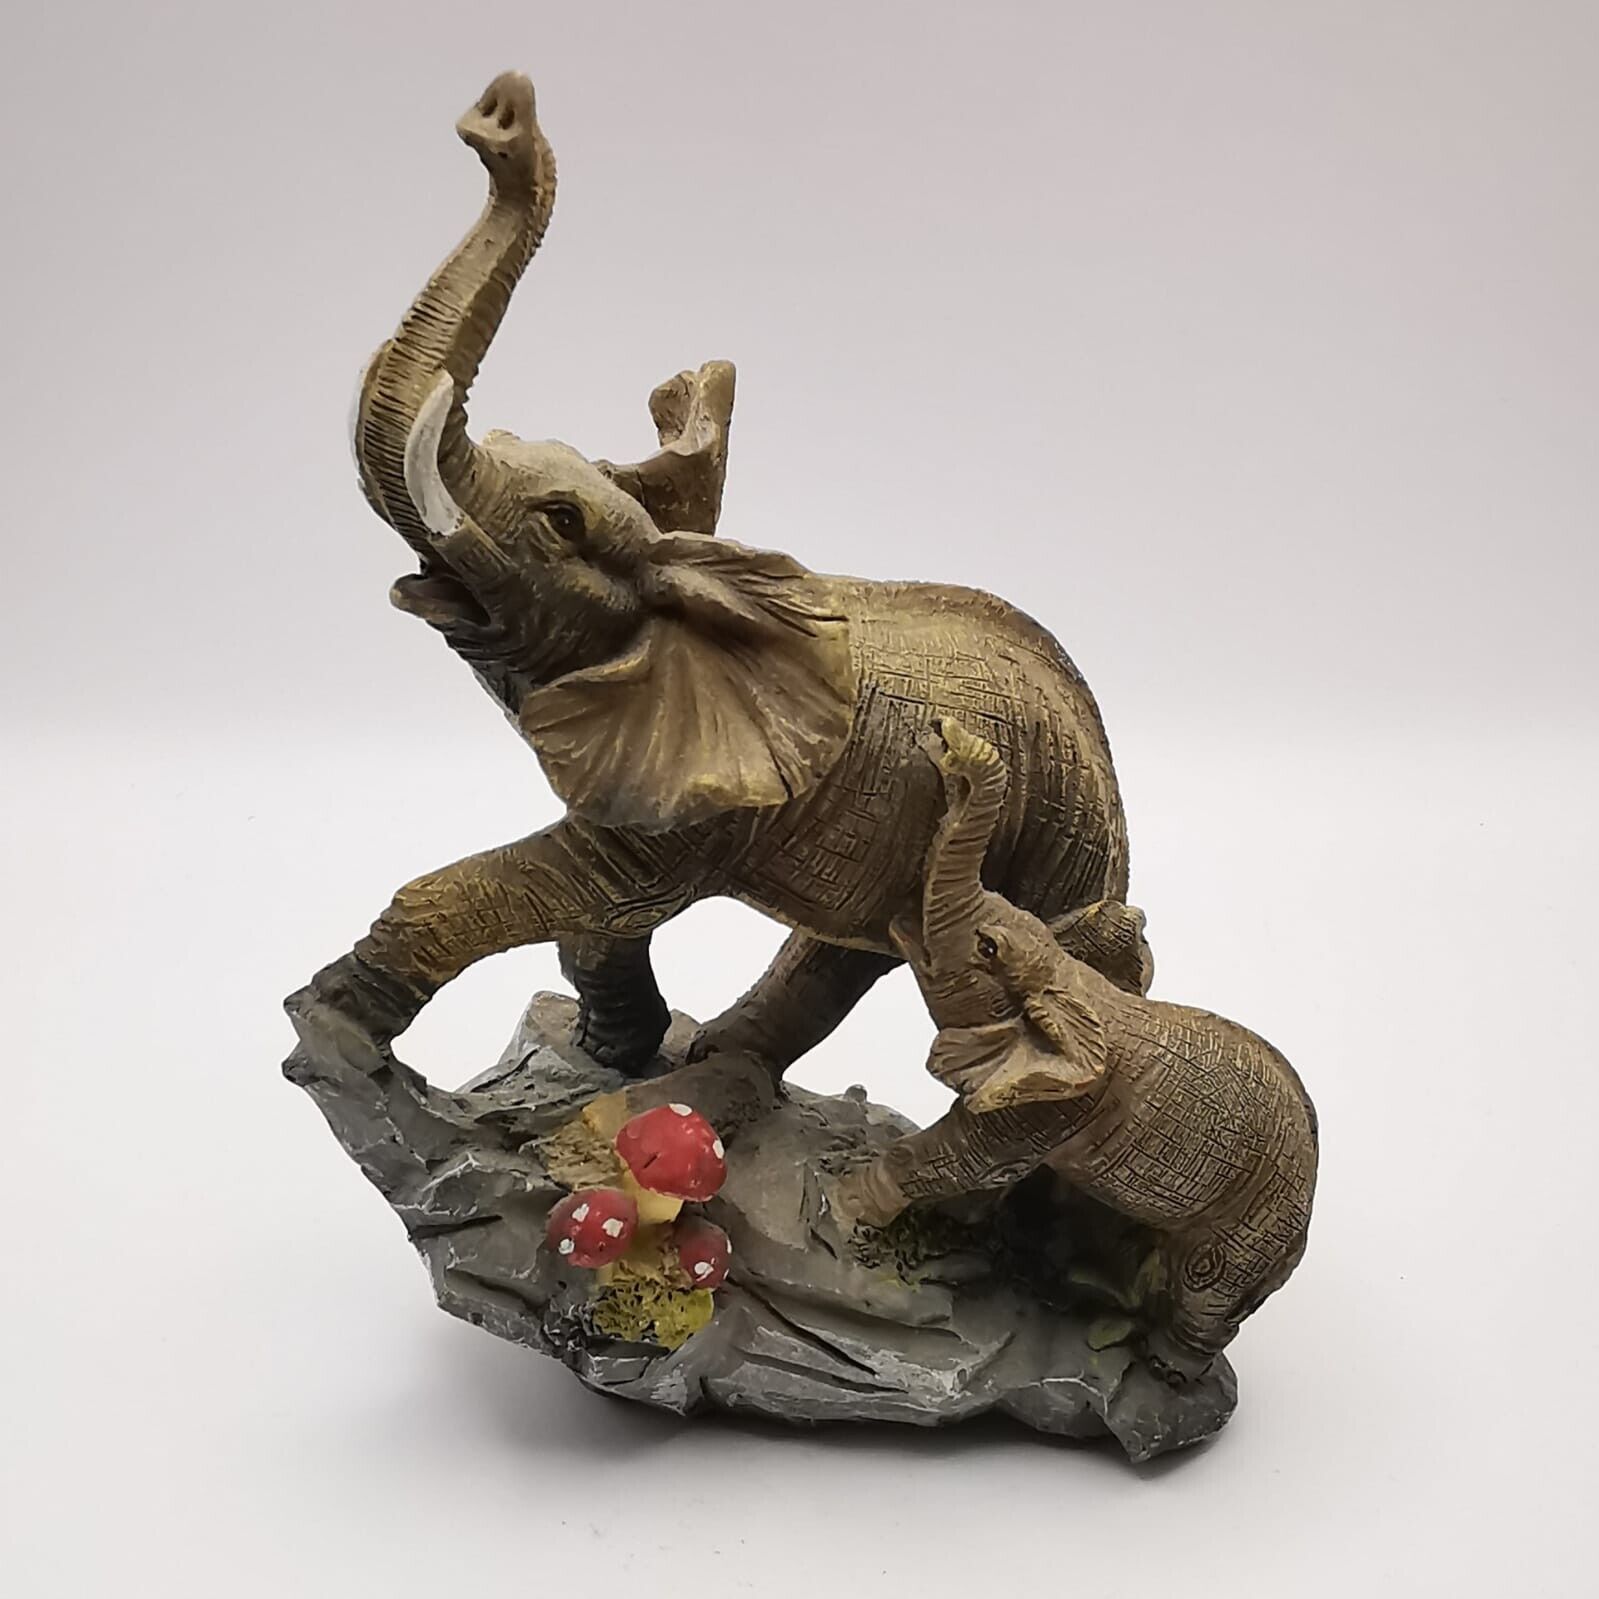 Elephant Figurine Small Vintage Handmade Ceramic Rare Animals Decor Gift 1980s